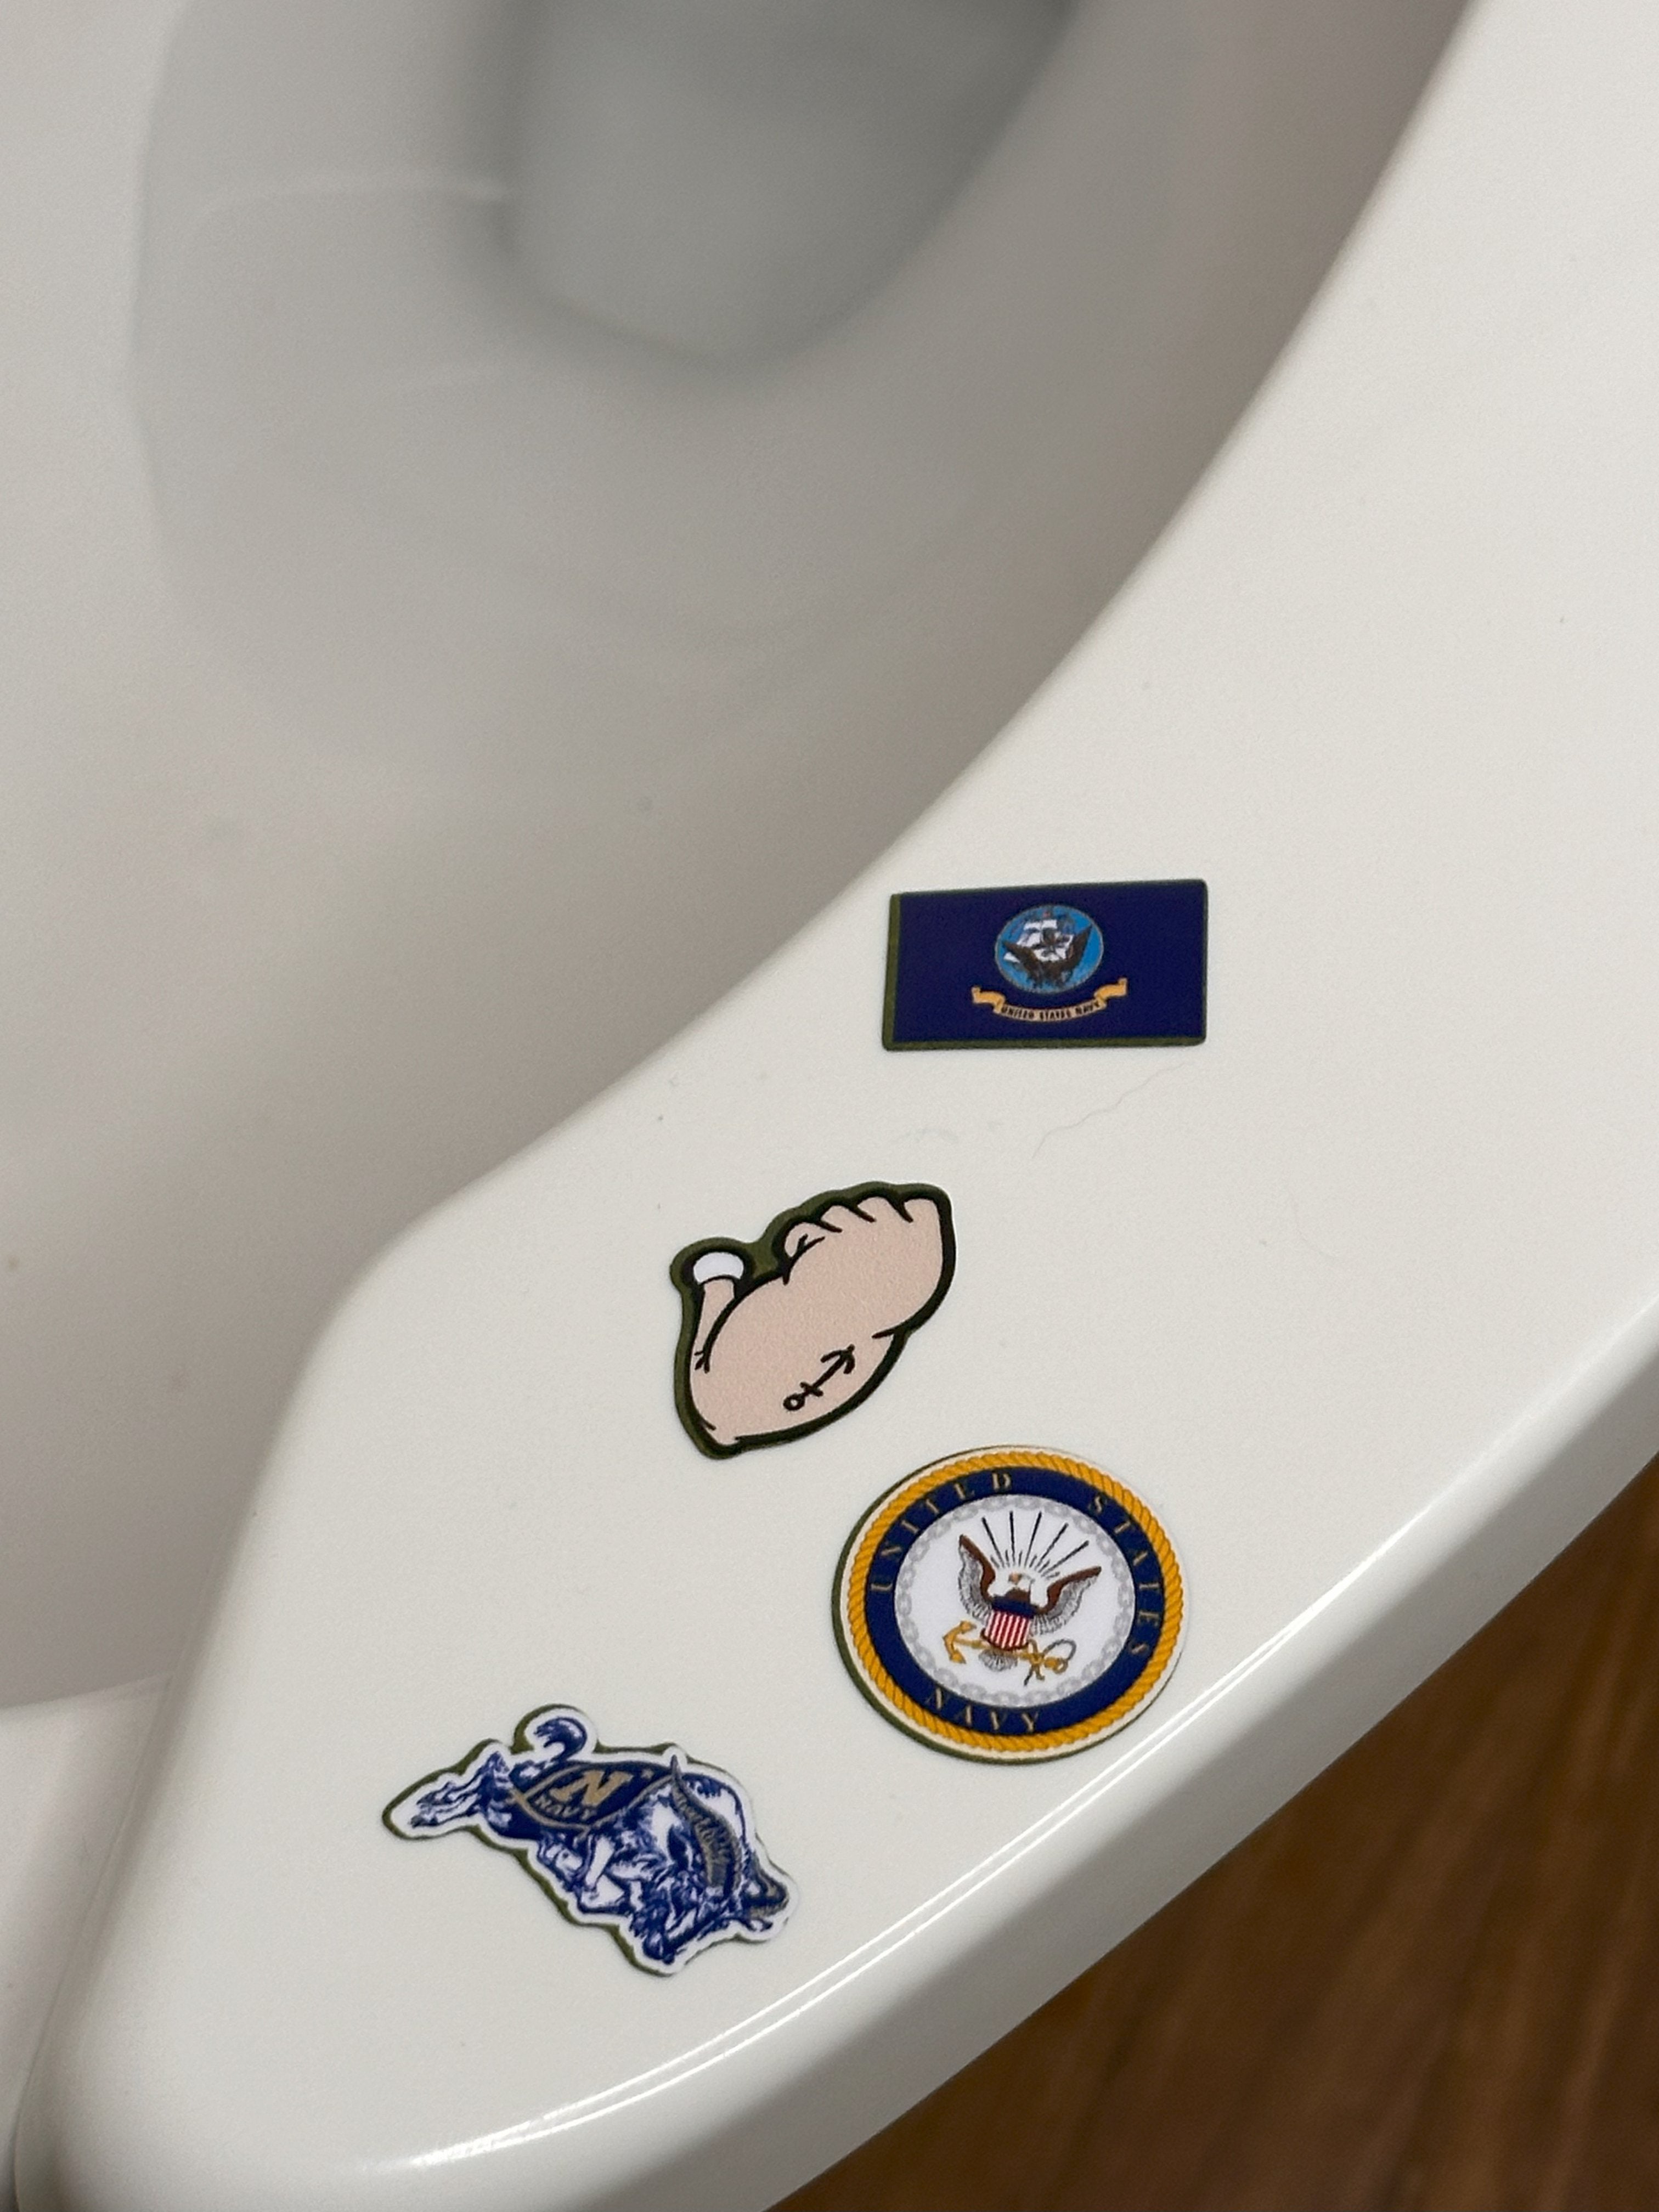 Stickers - Mini Morale - U.S. Navy Pack 1